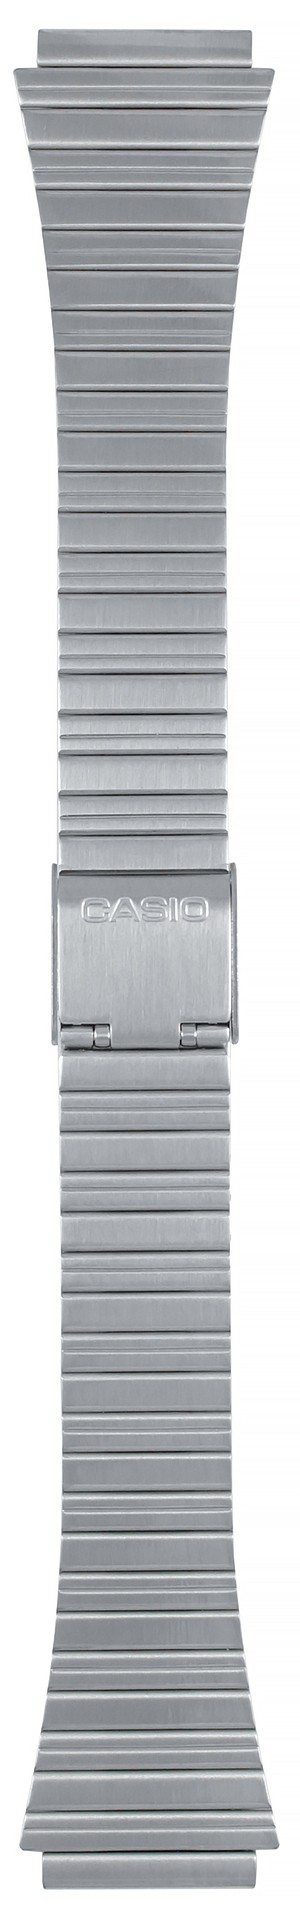 Casio DB-520A